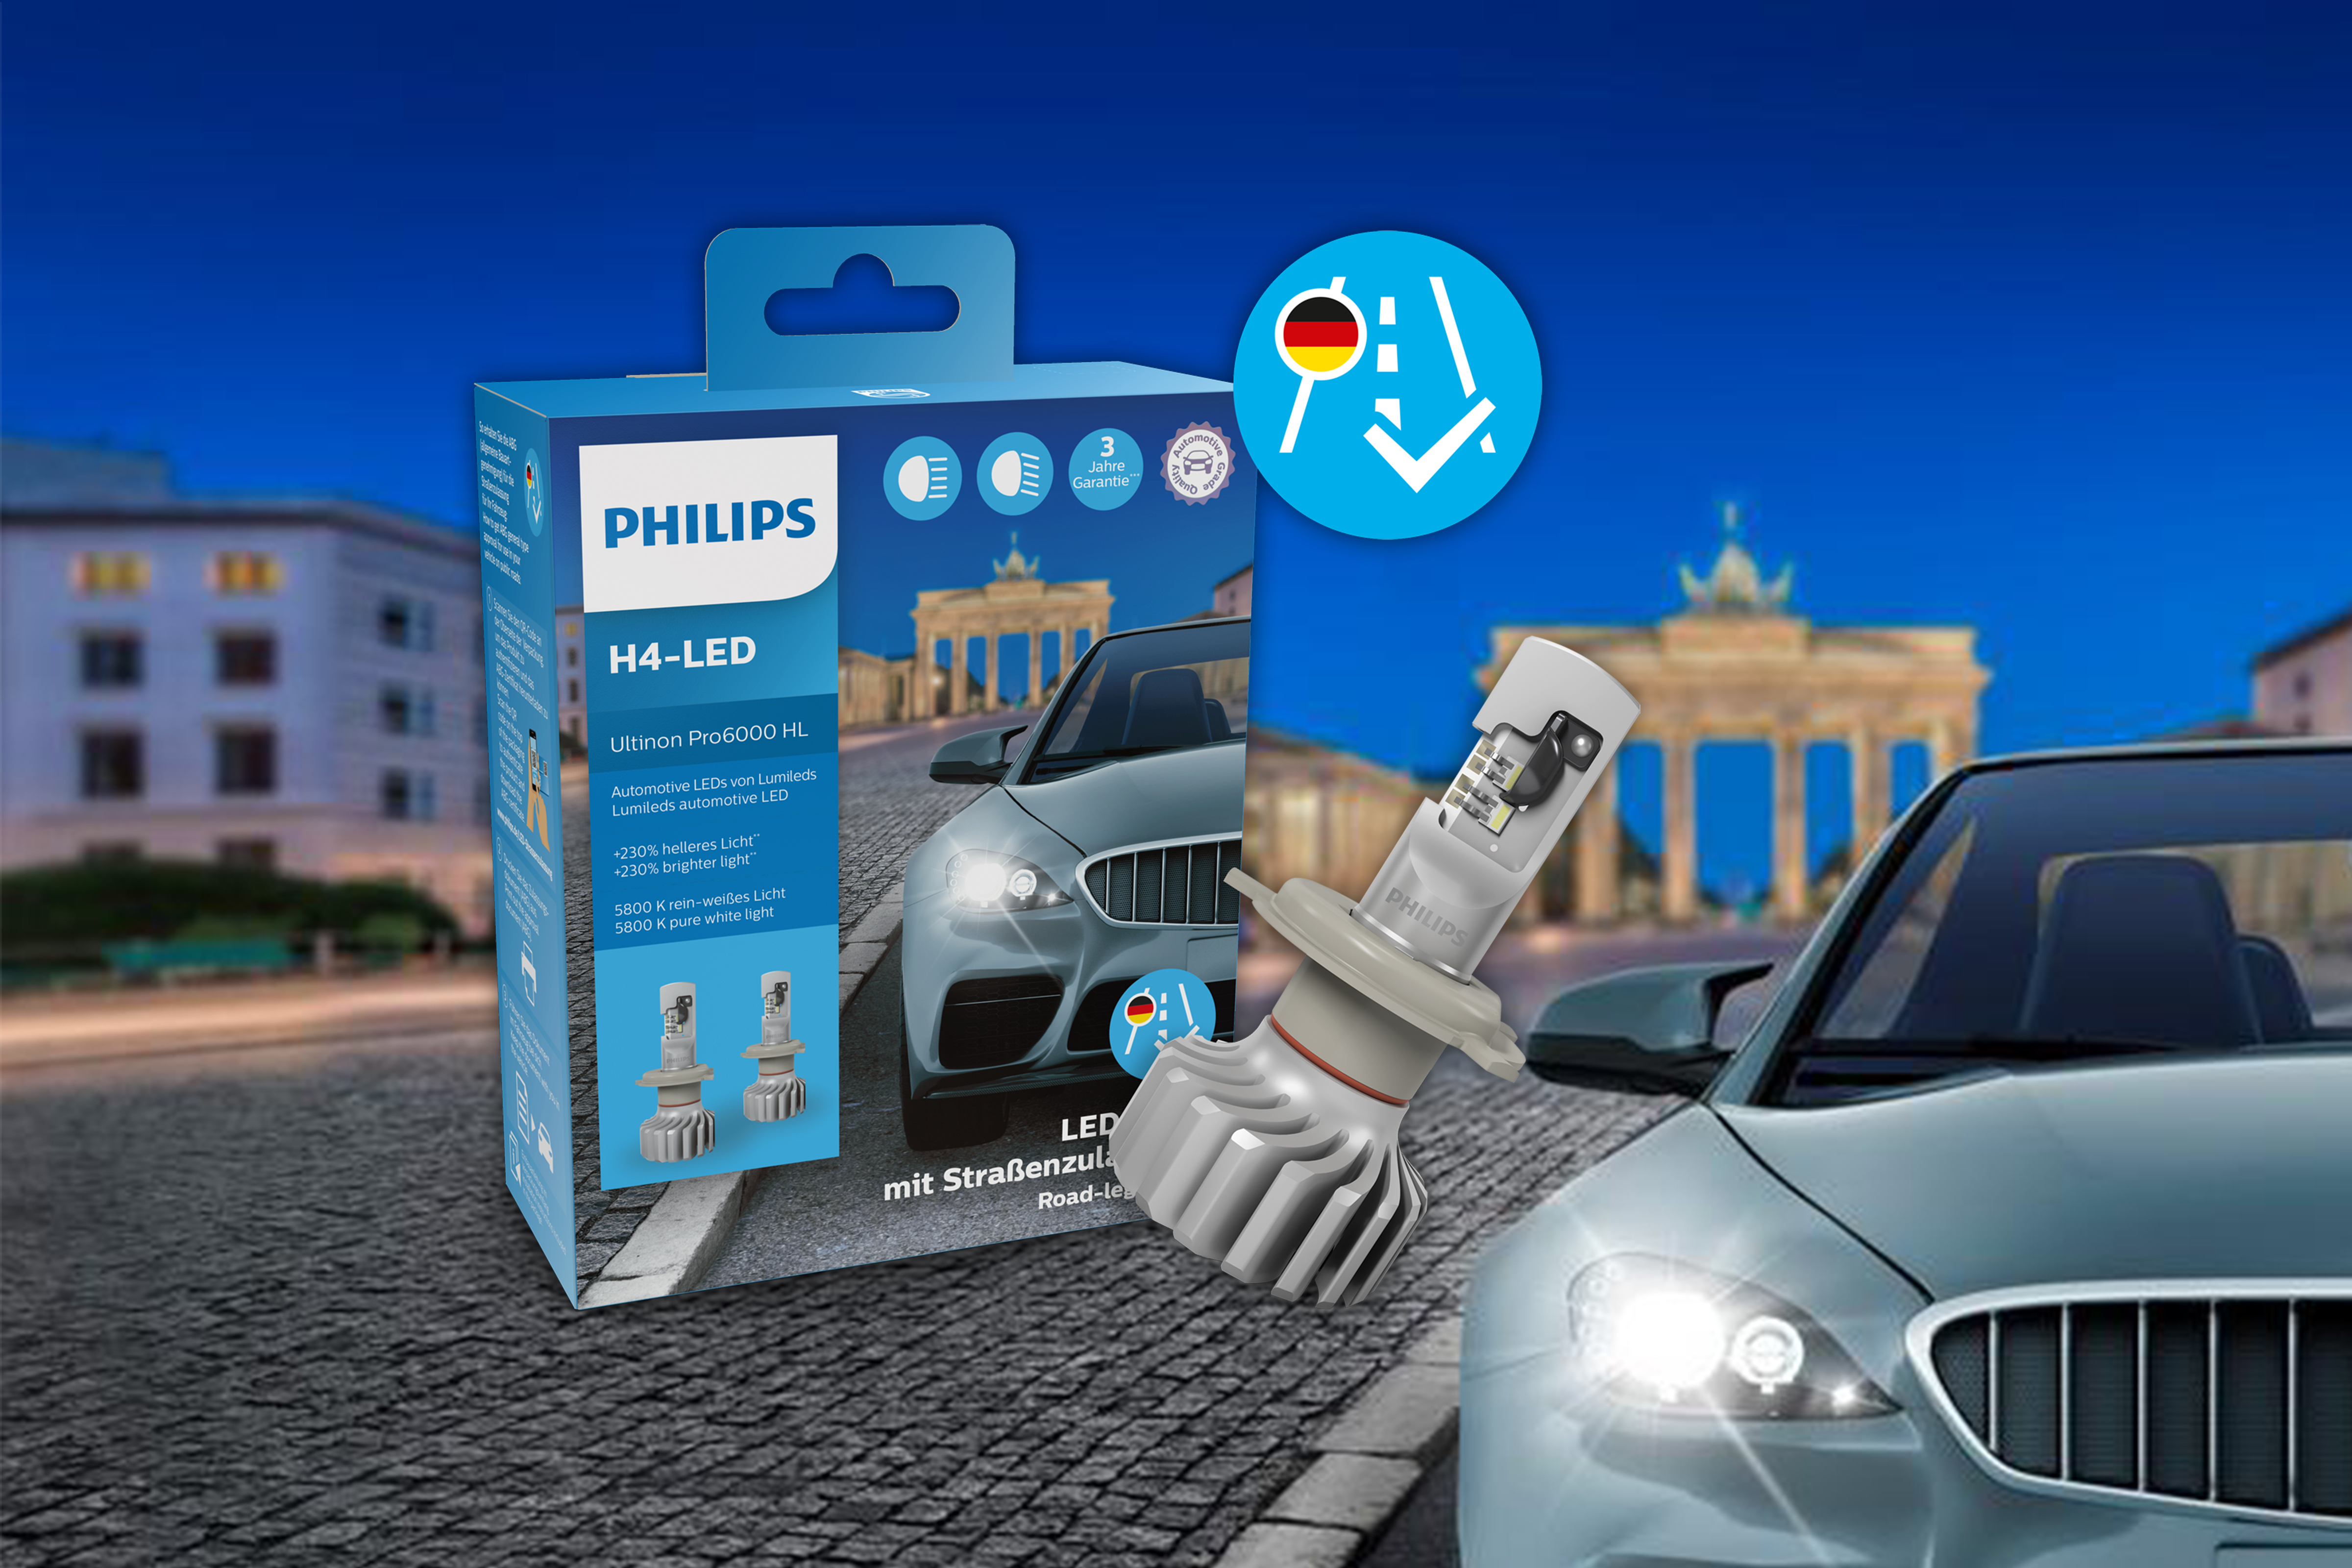 H7 LED-Lampen Philips Ultinon Pro6000 Zugelassene in Deutschland